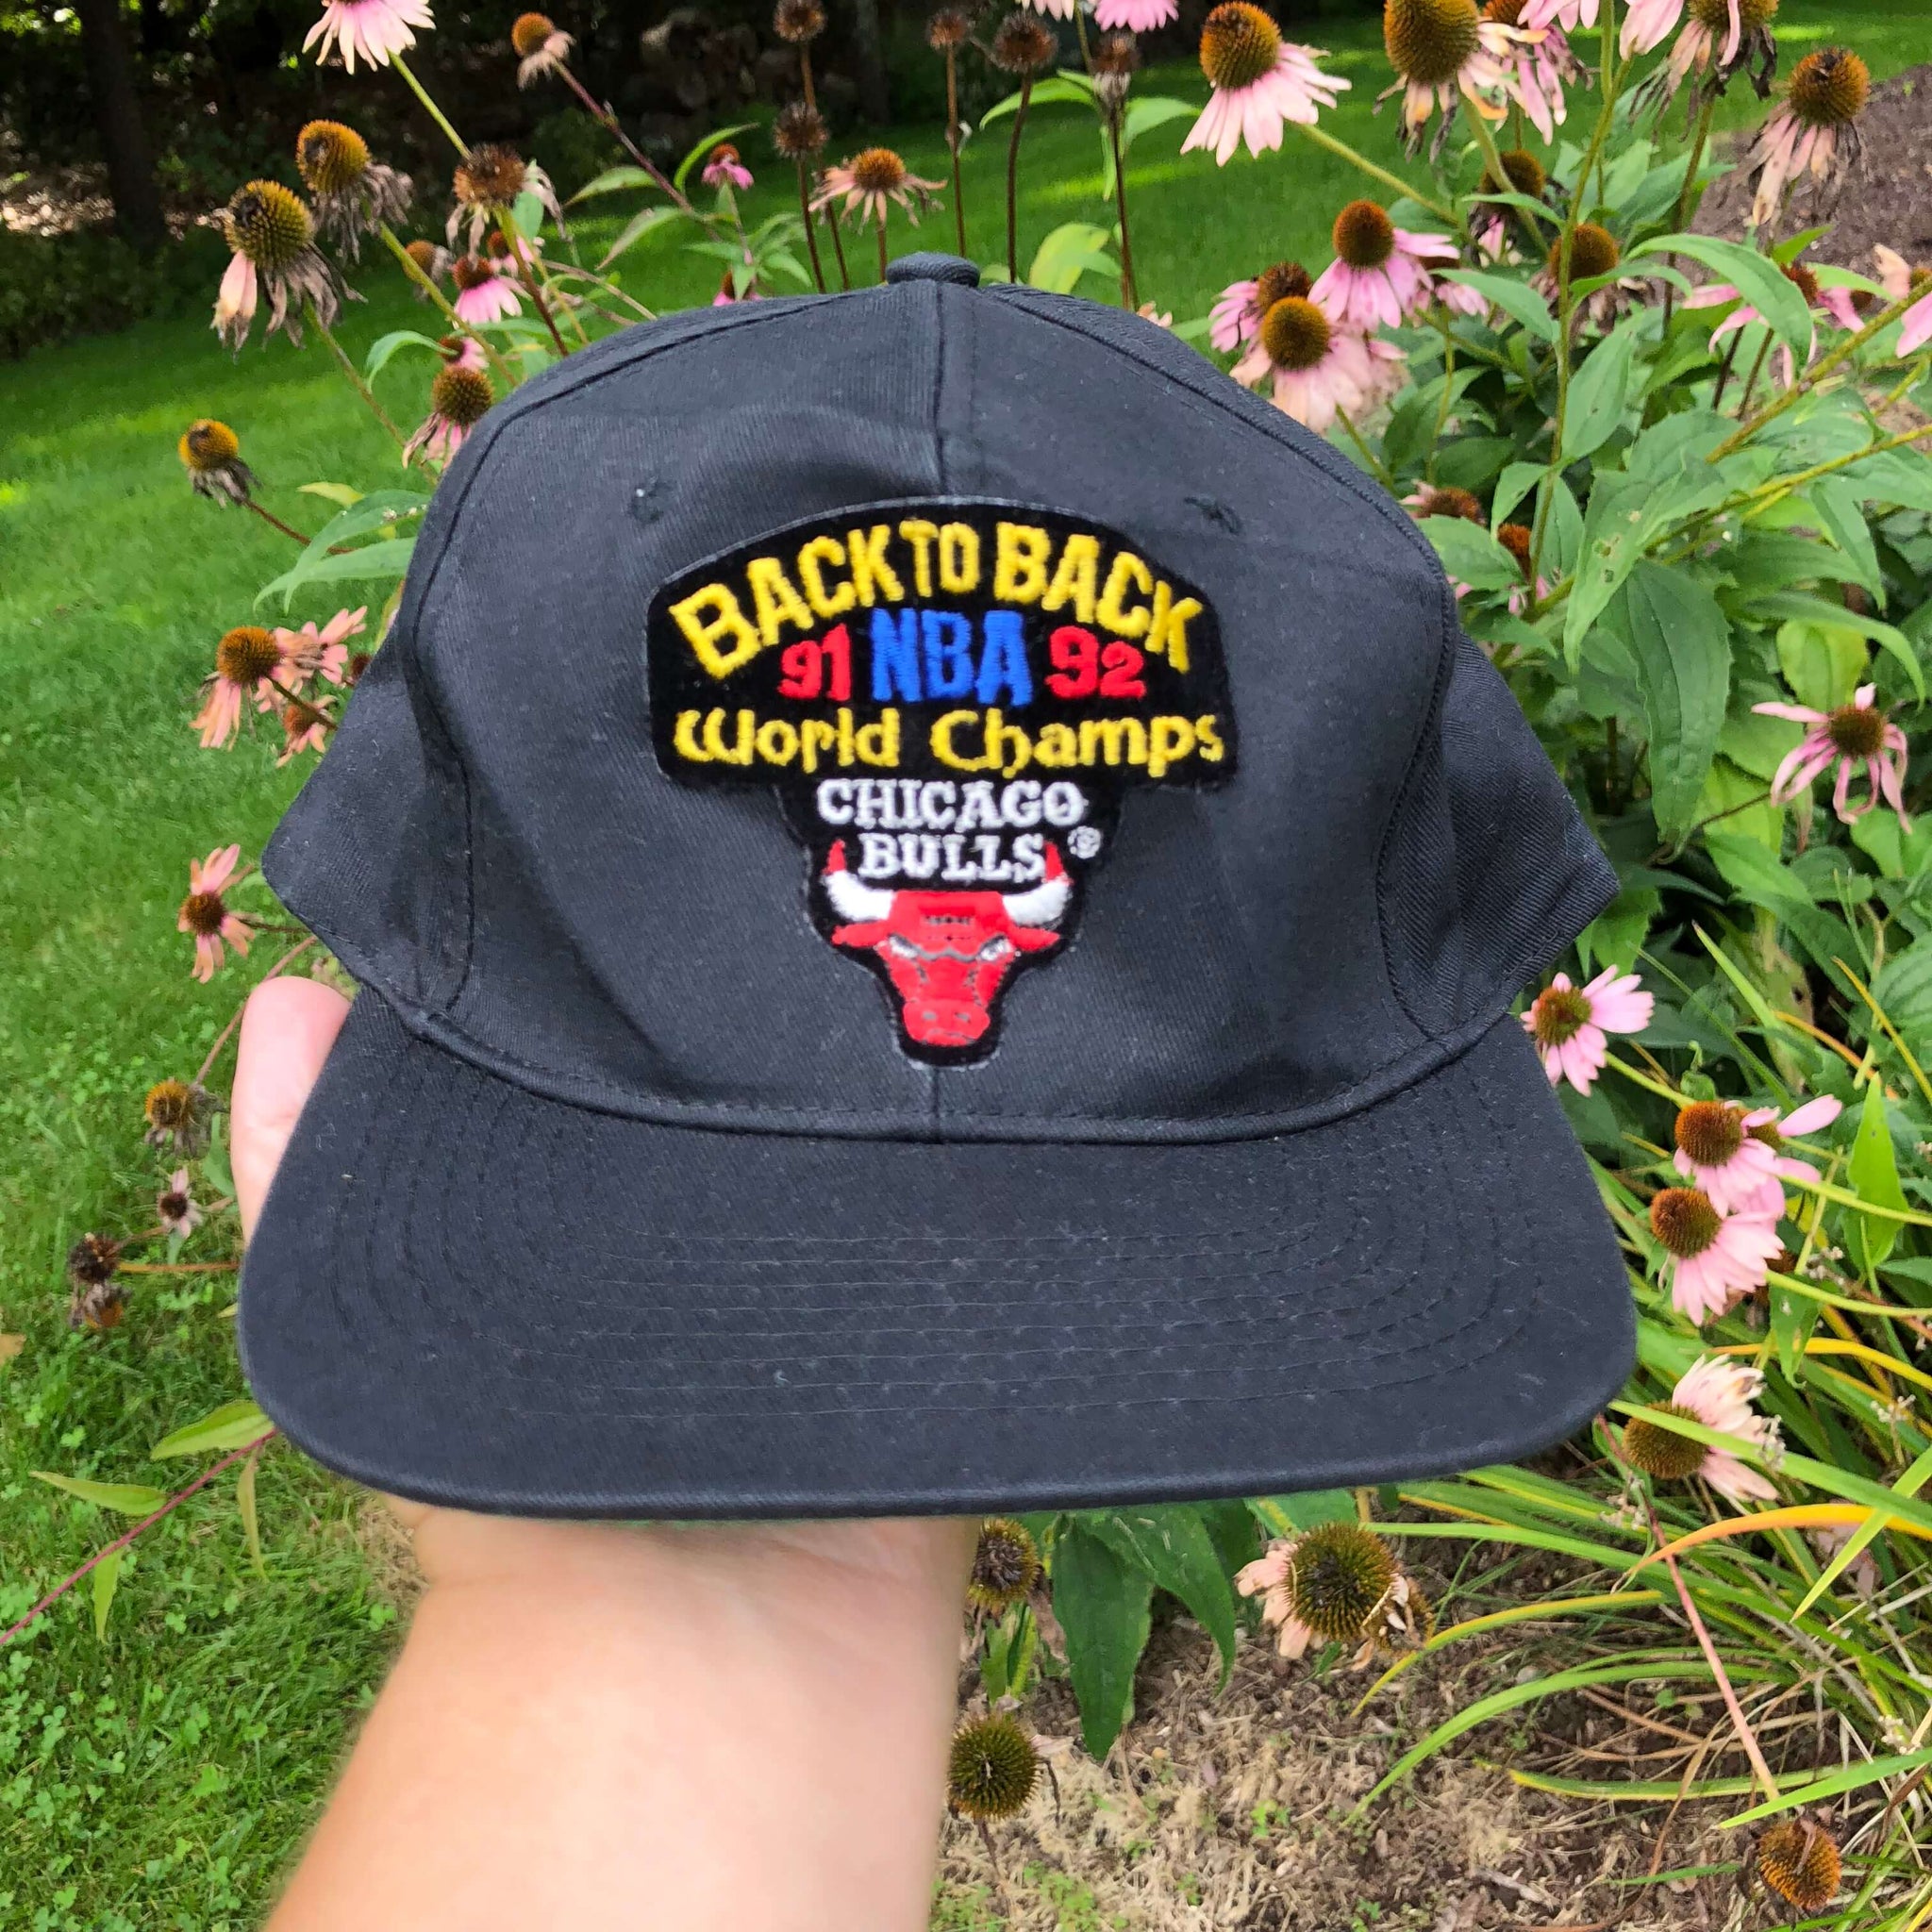 Vintage NBA Chicago Bulls 1991-1992 Back to Back World Champs Snapback Hat